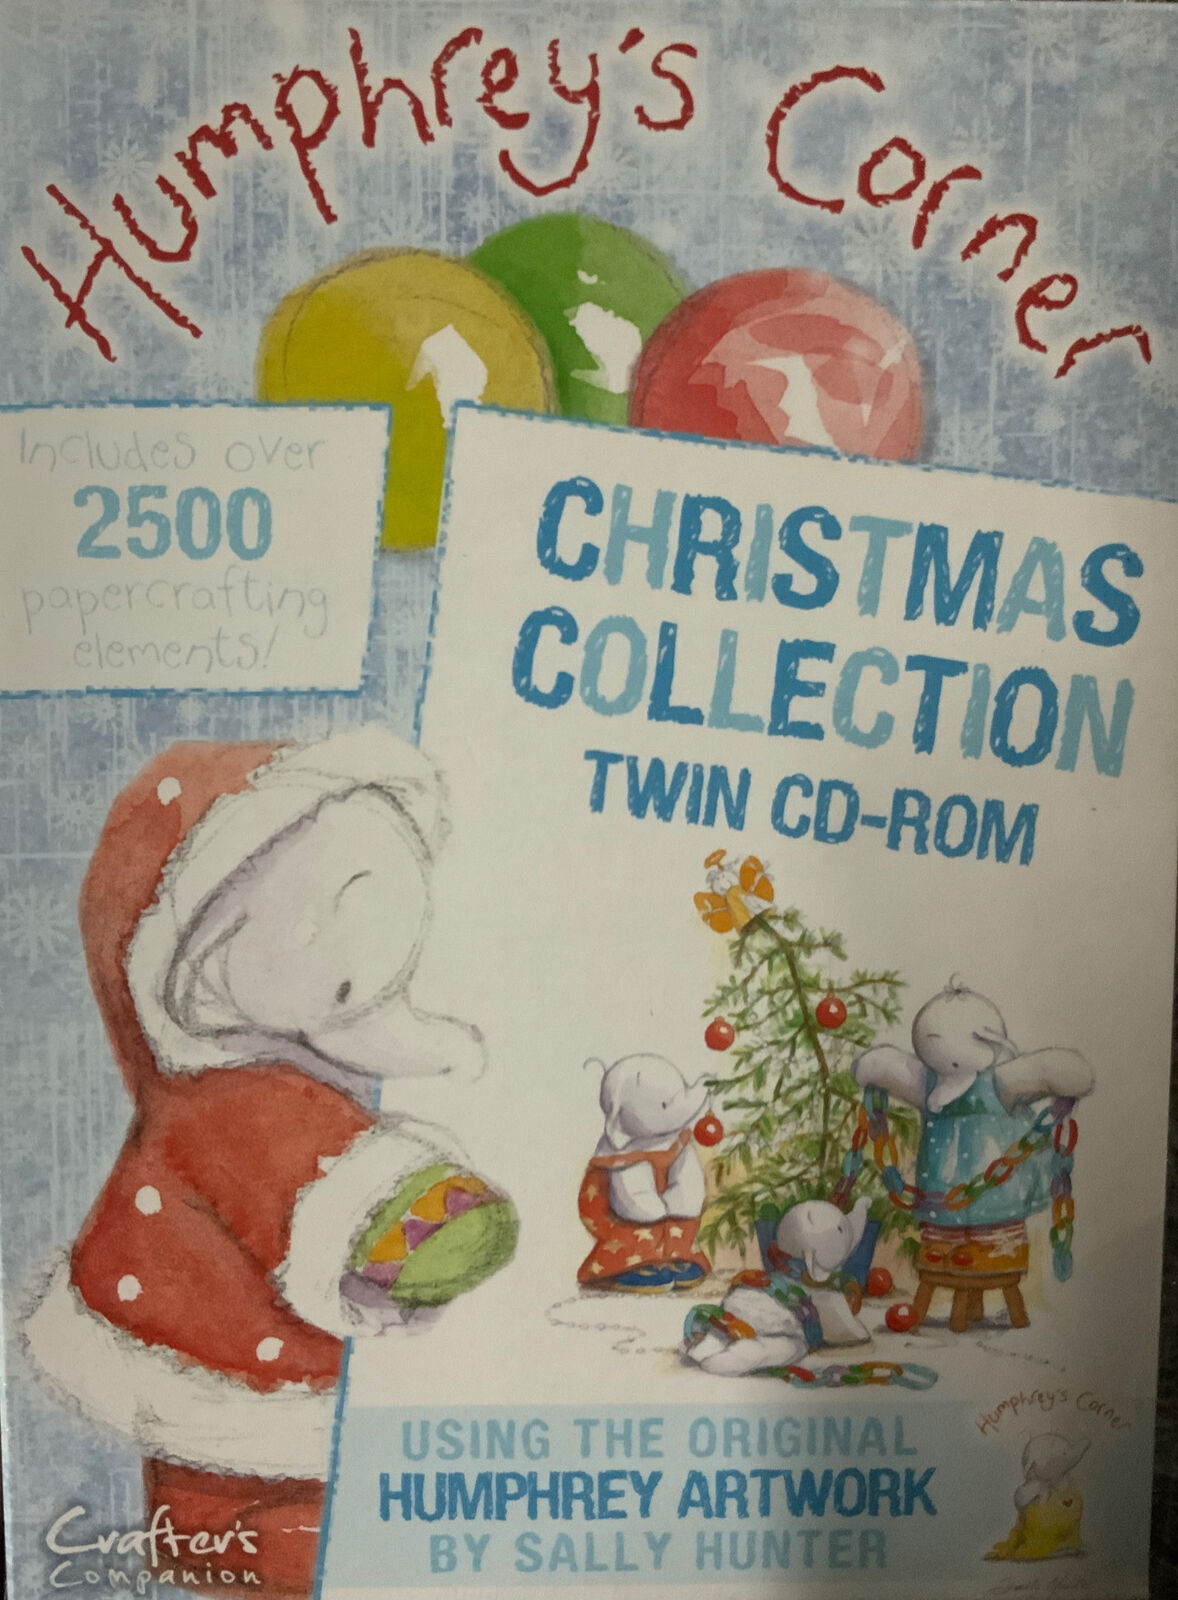 Humphrey’s Corner Christmas Collection Twin Cd-rom